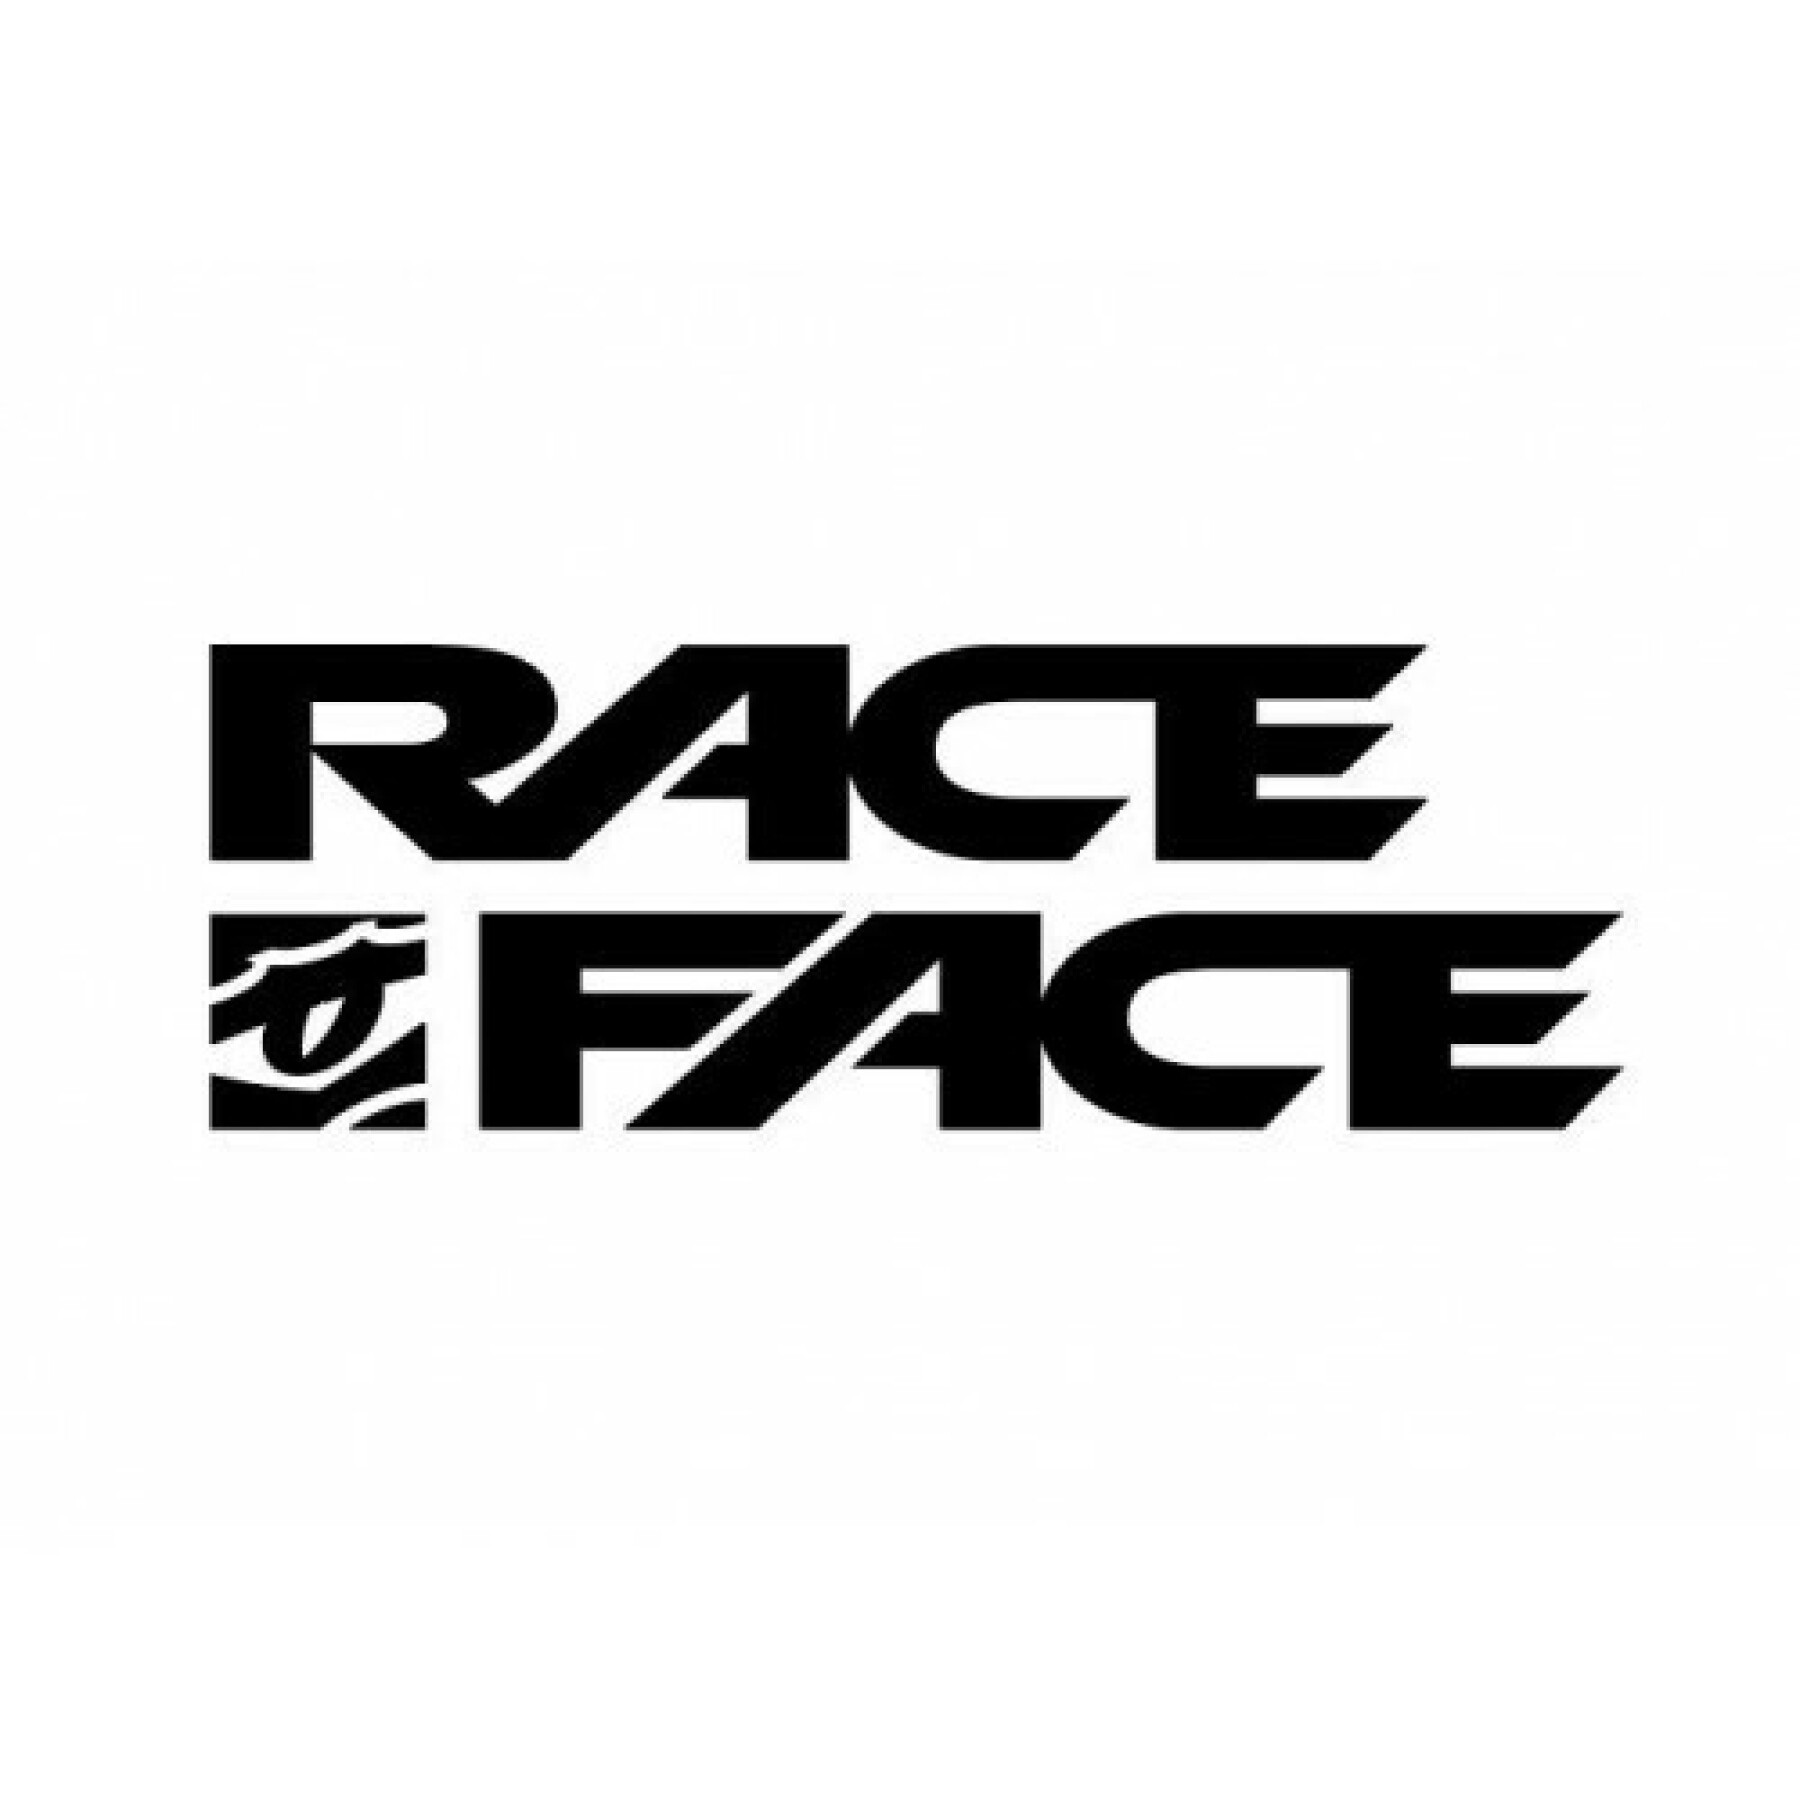 Orla Race Face arc offset - 30 - 29 - 28t